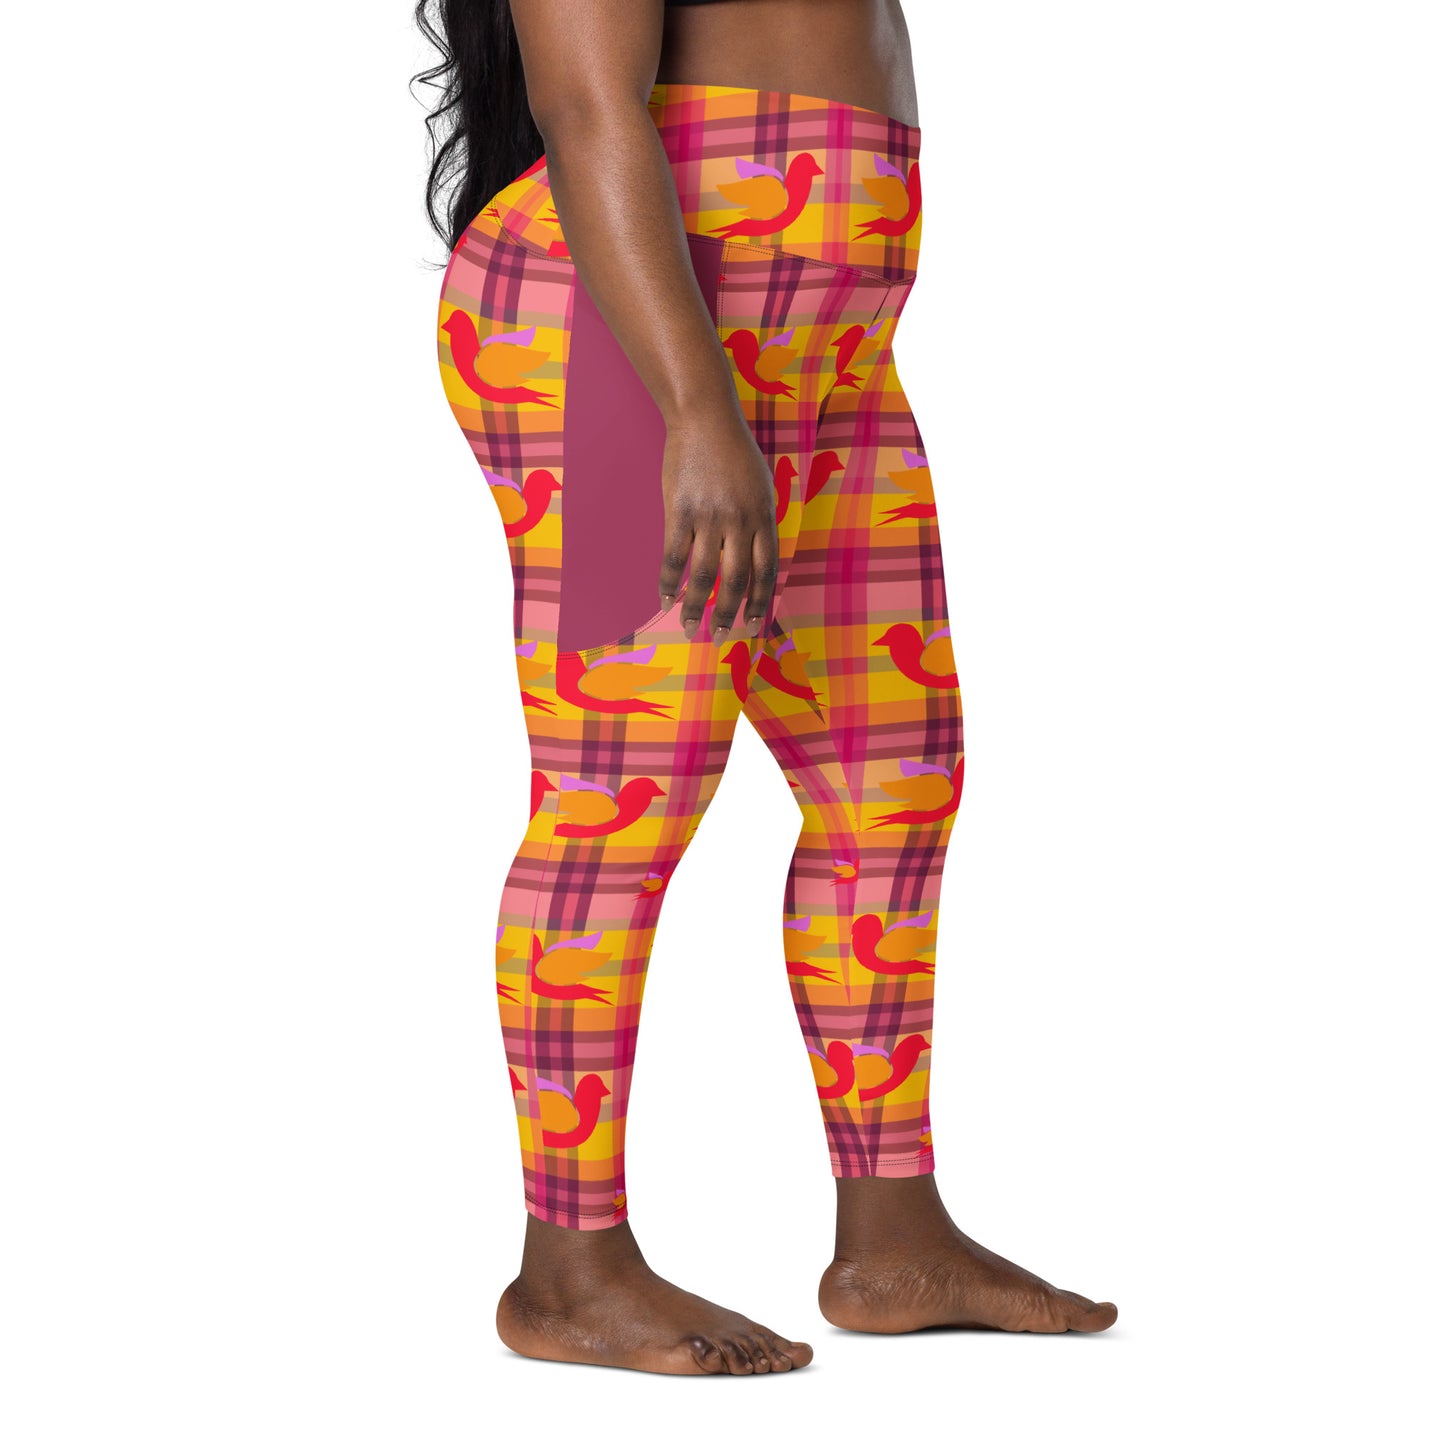 Txoriak High Waist 7/8 Length Recycled Yoga Leggings / Yoga Pants with Pockets